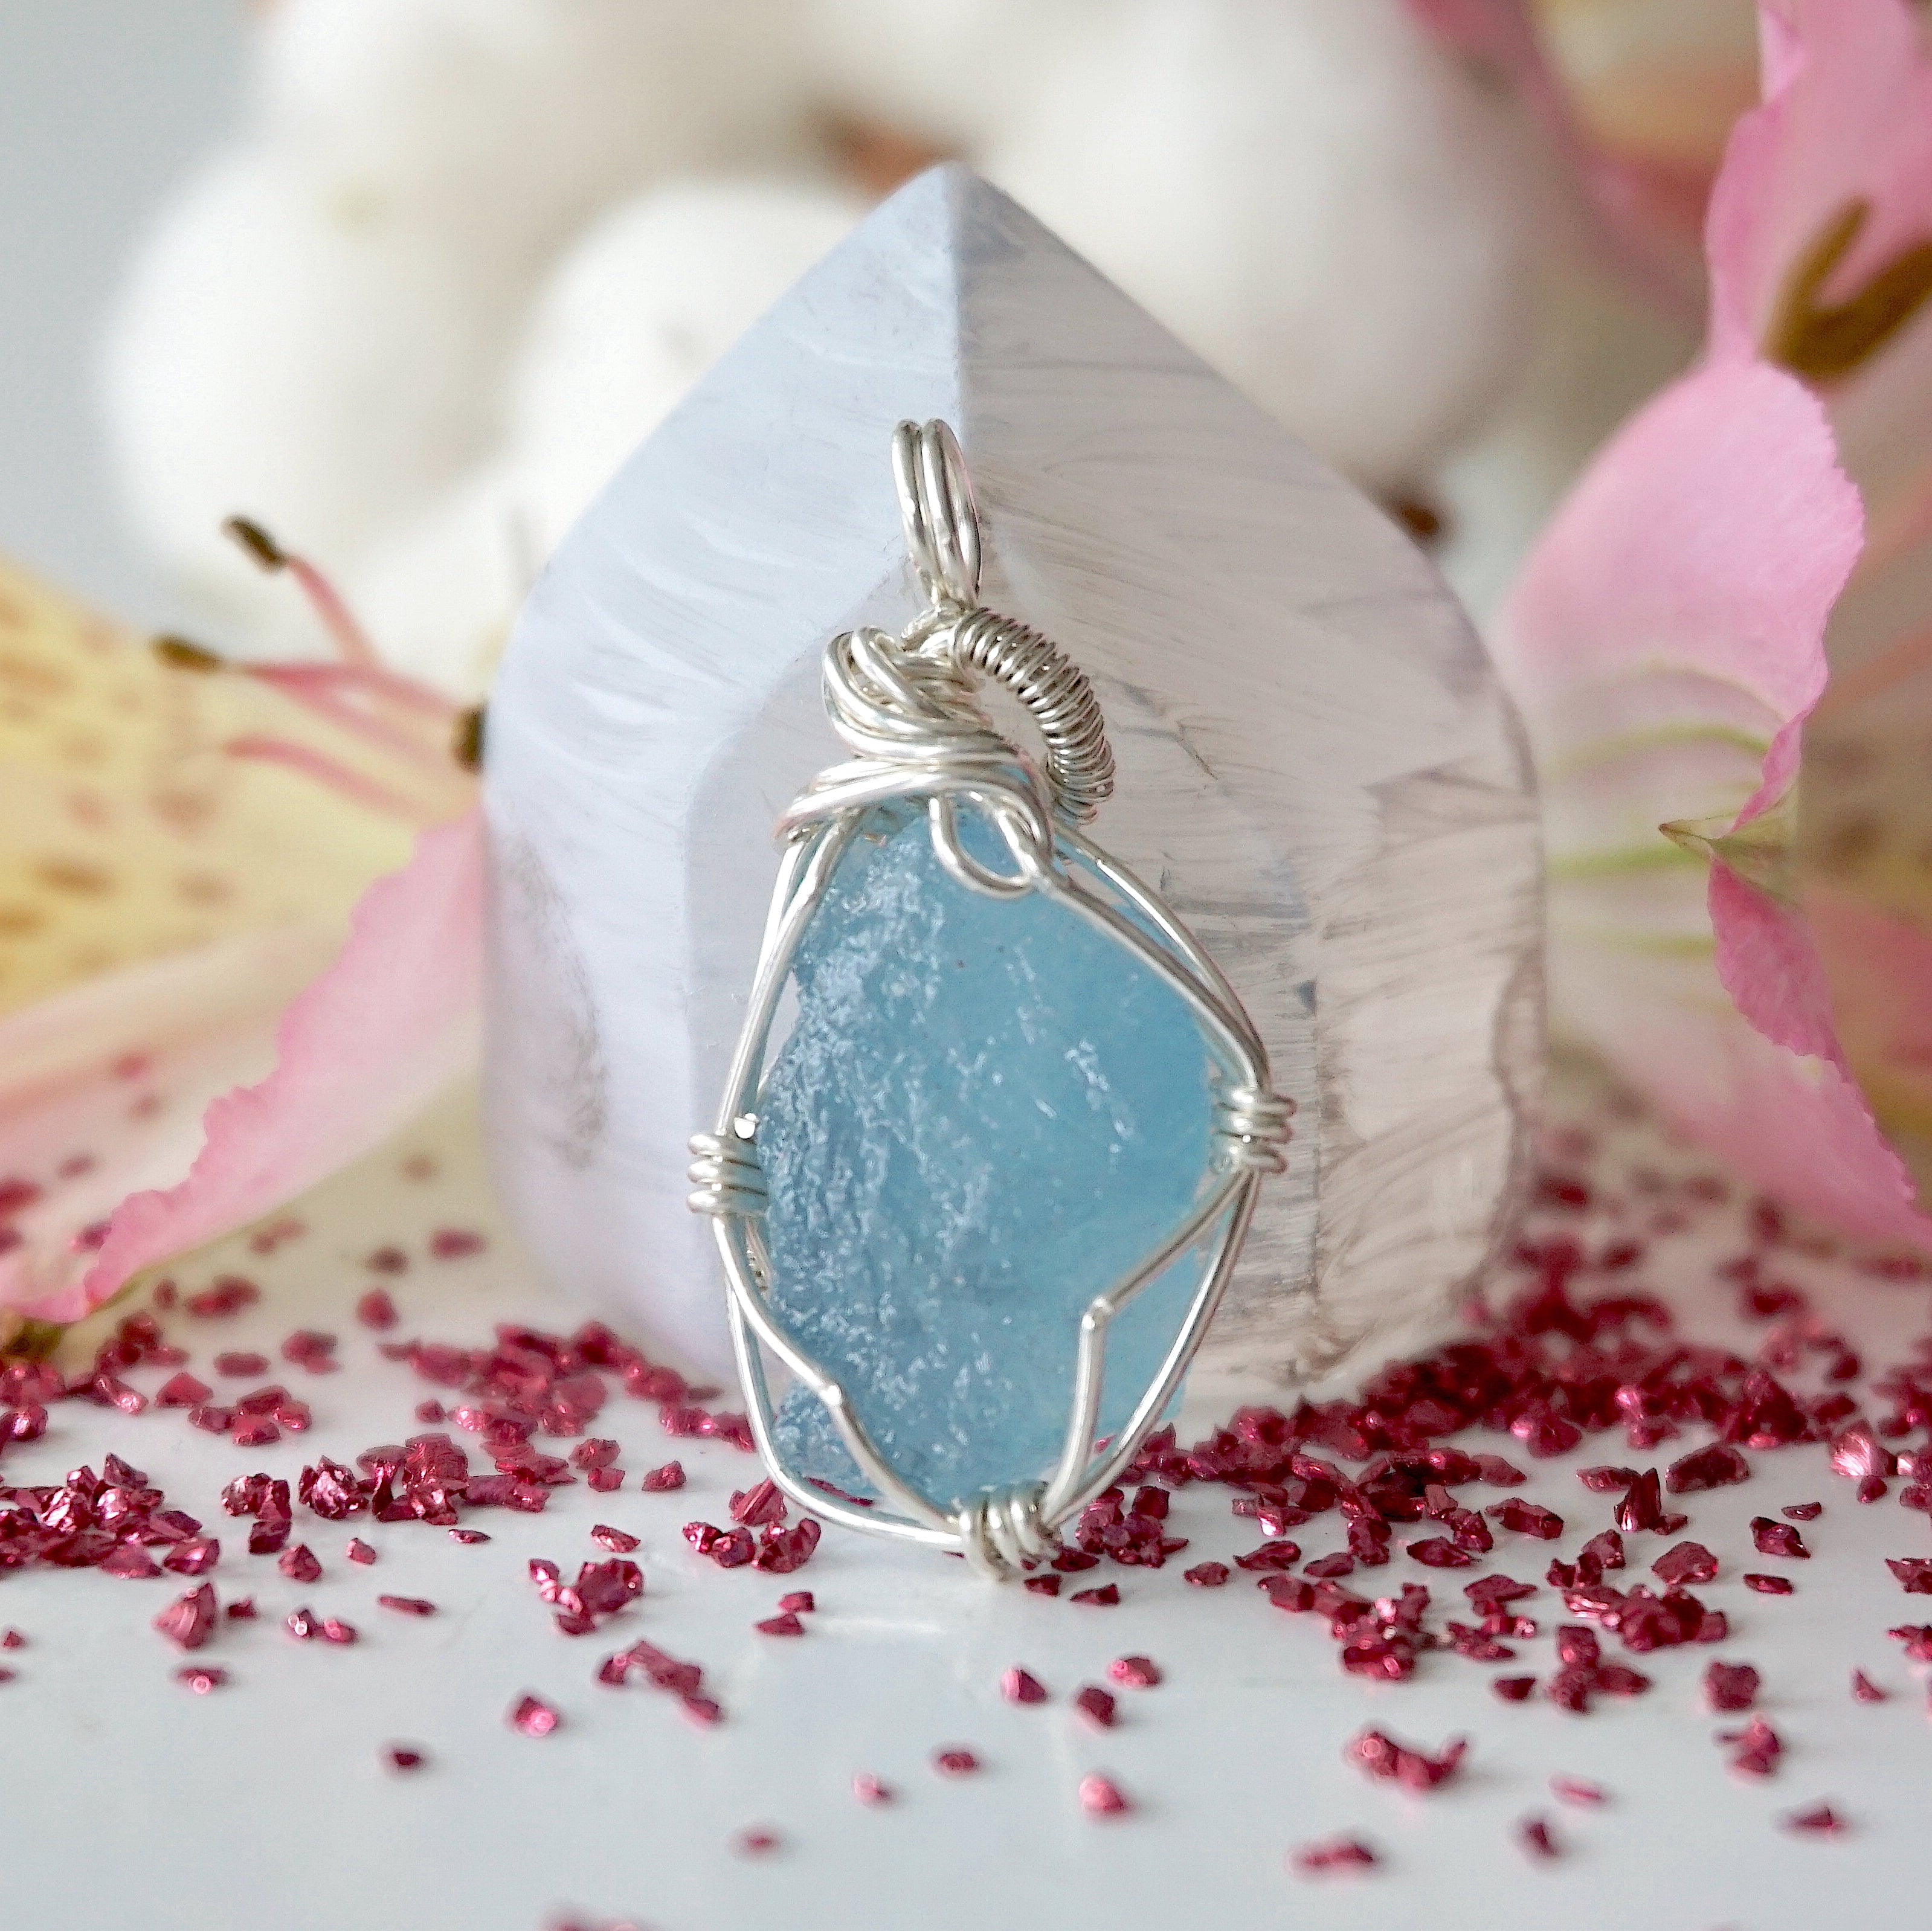 Buy QIVA NINE Natural Raw Blue Aquamarine - Sea Stone Rough Crystal  Gemstone Dainty Women Pendant Necklace, Chakra Healing Crystals,  Birthstone, Silver Plated Chain 18 inch at Amazon.in